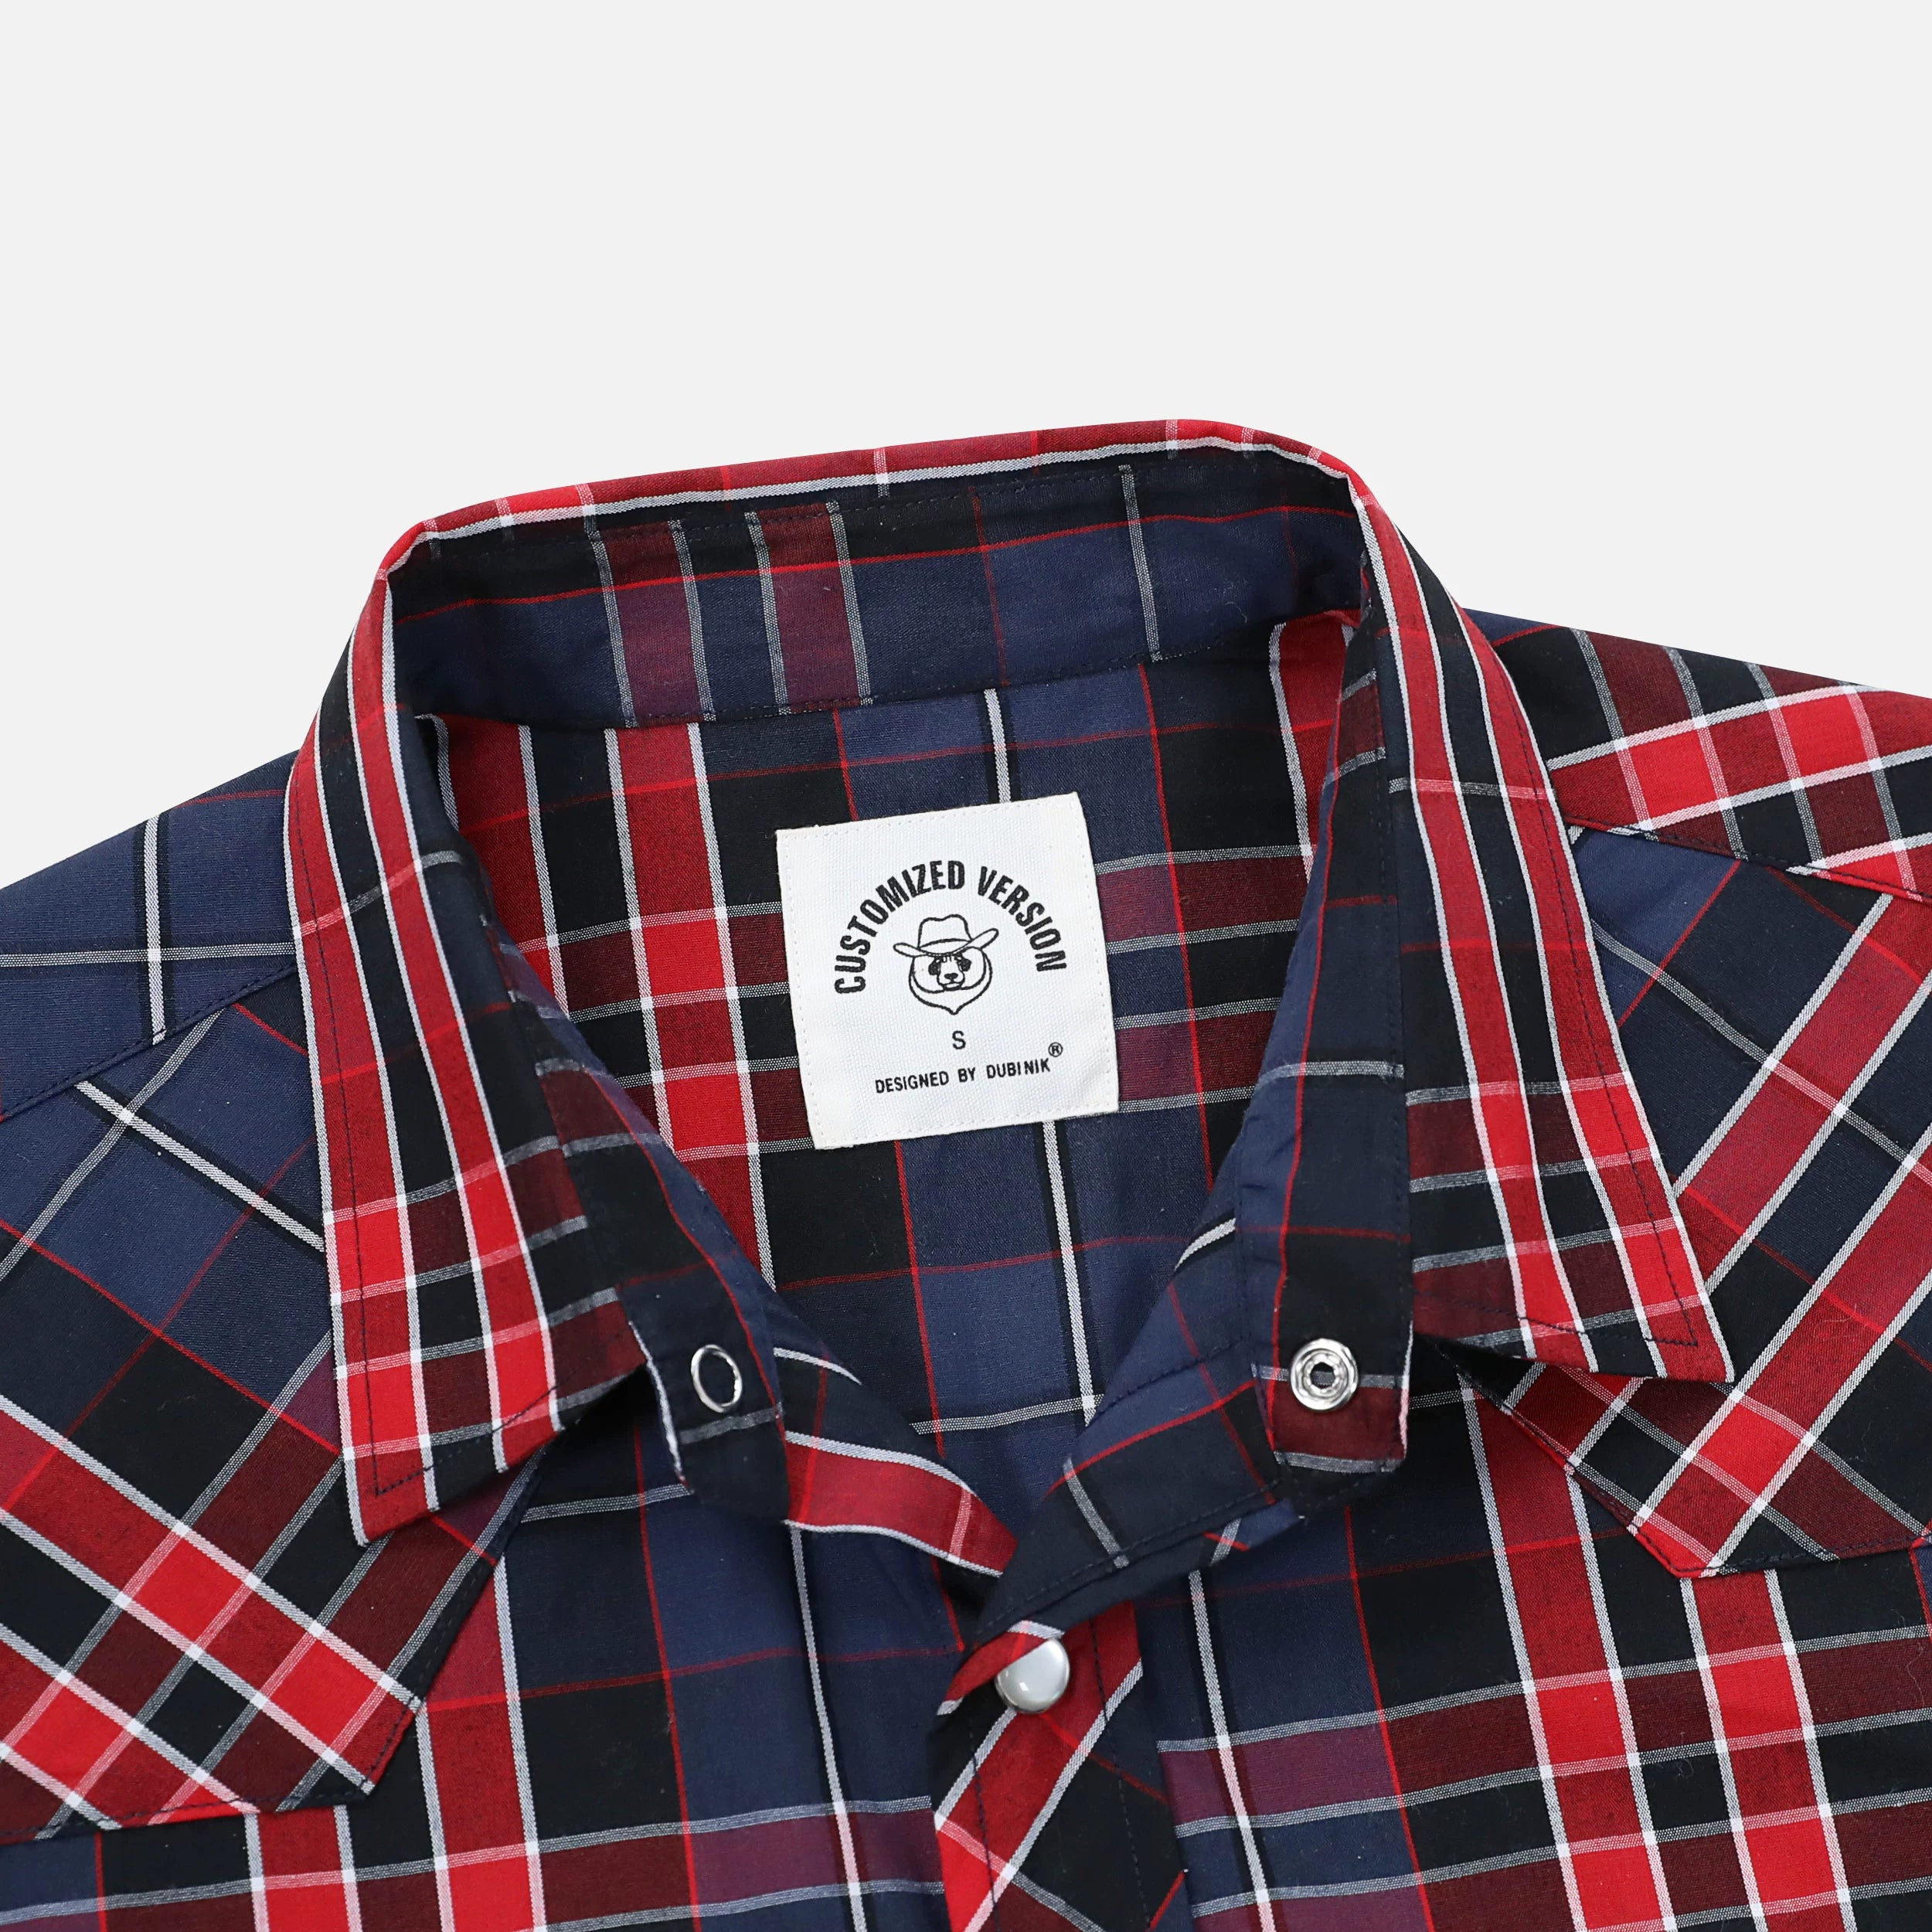 Dubinik® Western Shirts for Men Short Sleeve Plaid Pearl Snap Shirts for Men Button Up Shirt Cowboy Casual Work Shirt#41026